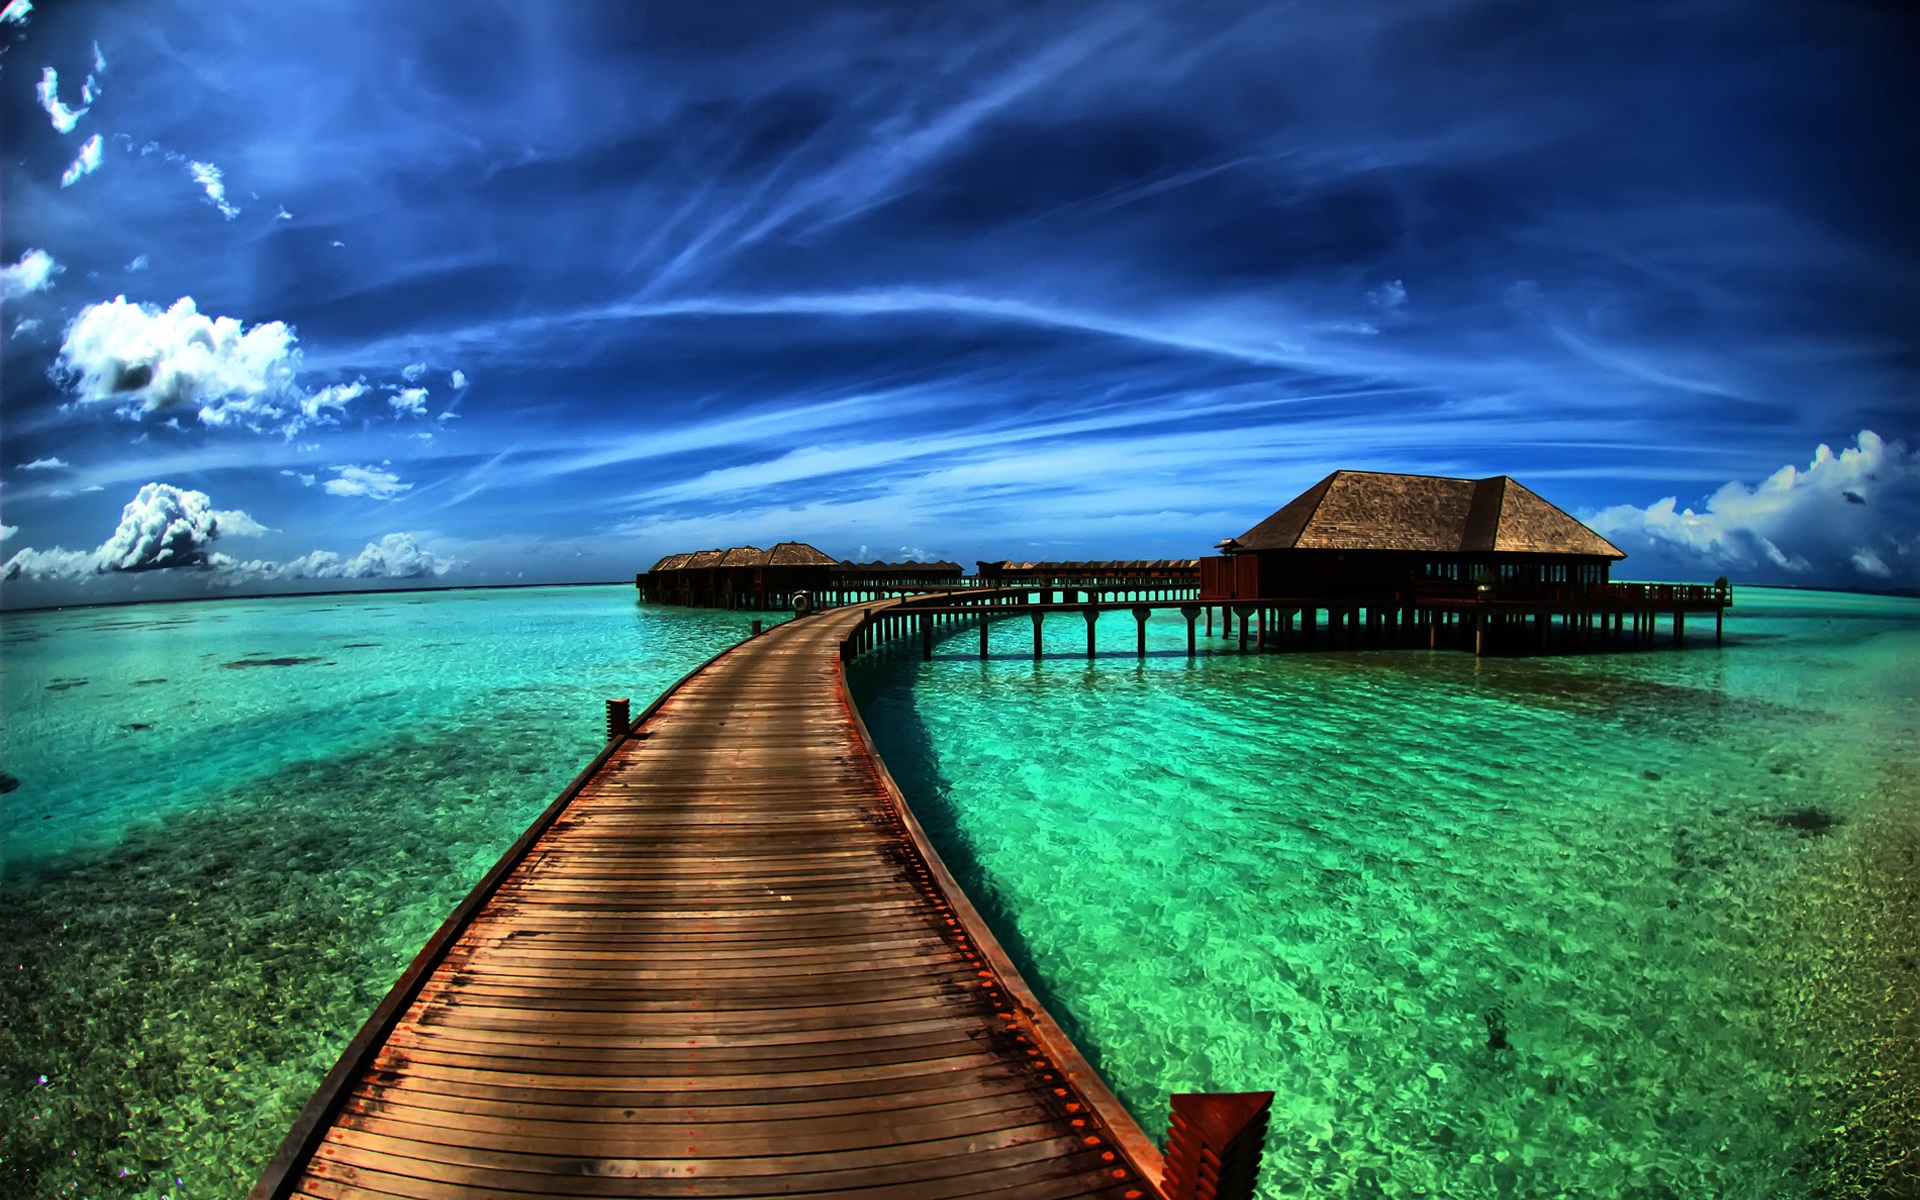 maldives high resolution wallpaper download maldives images free ...